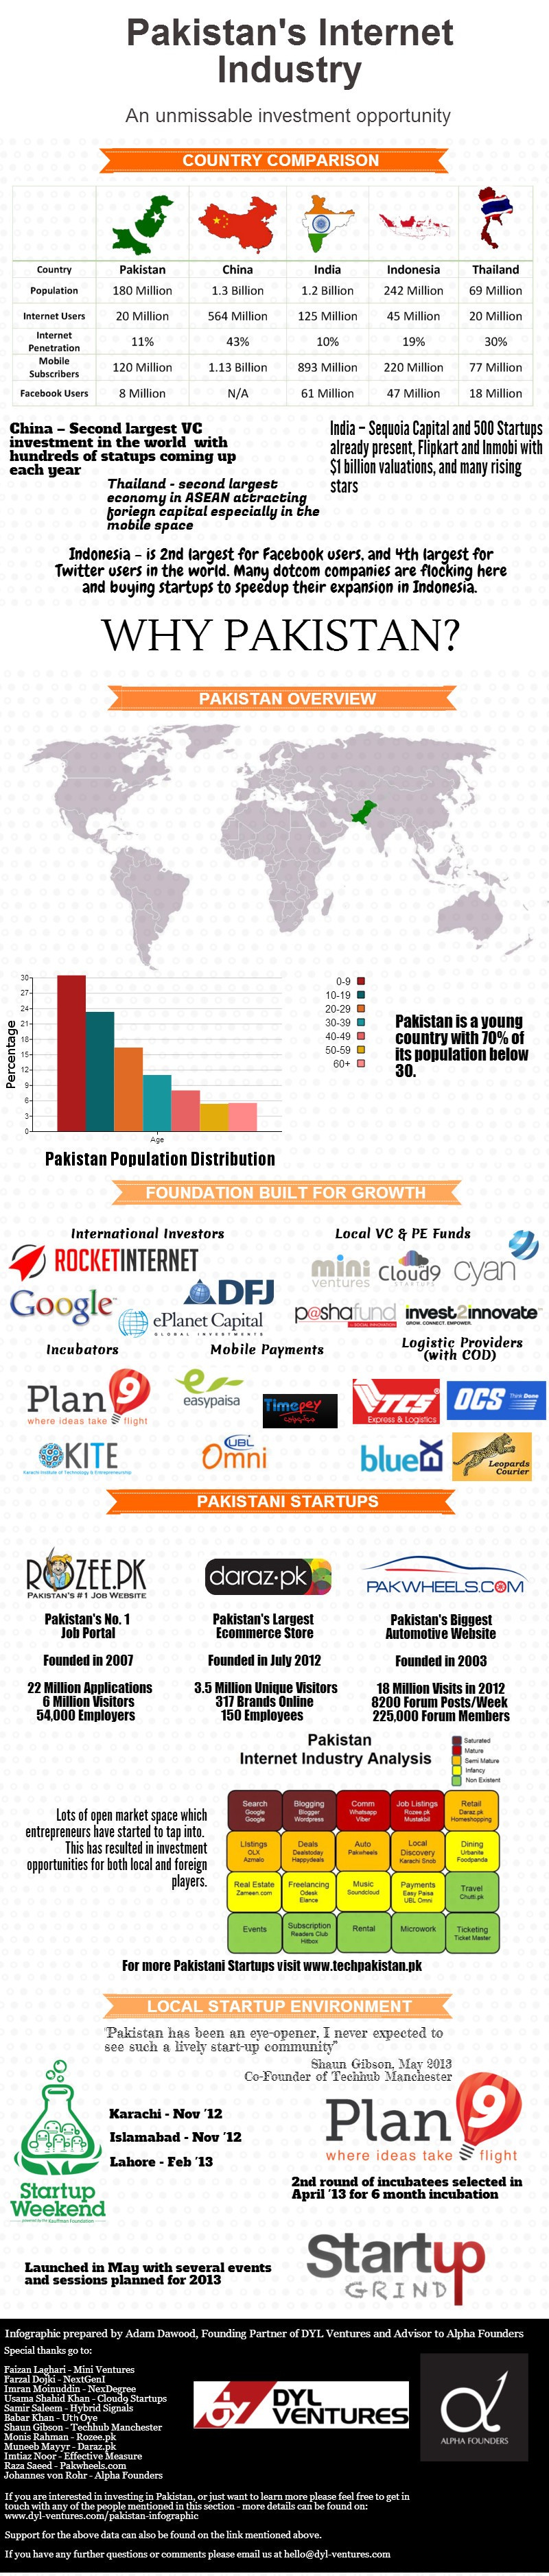 Pakistan Venture Capital & Entrepreneur Ecosystem